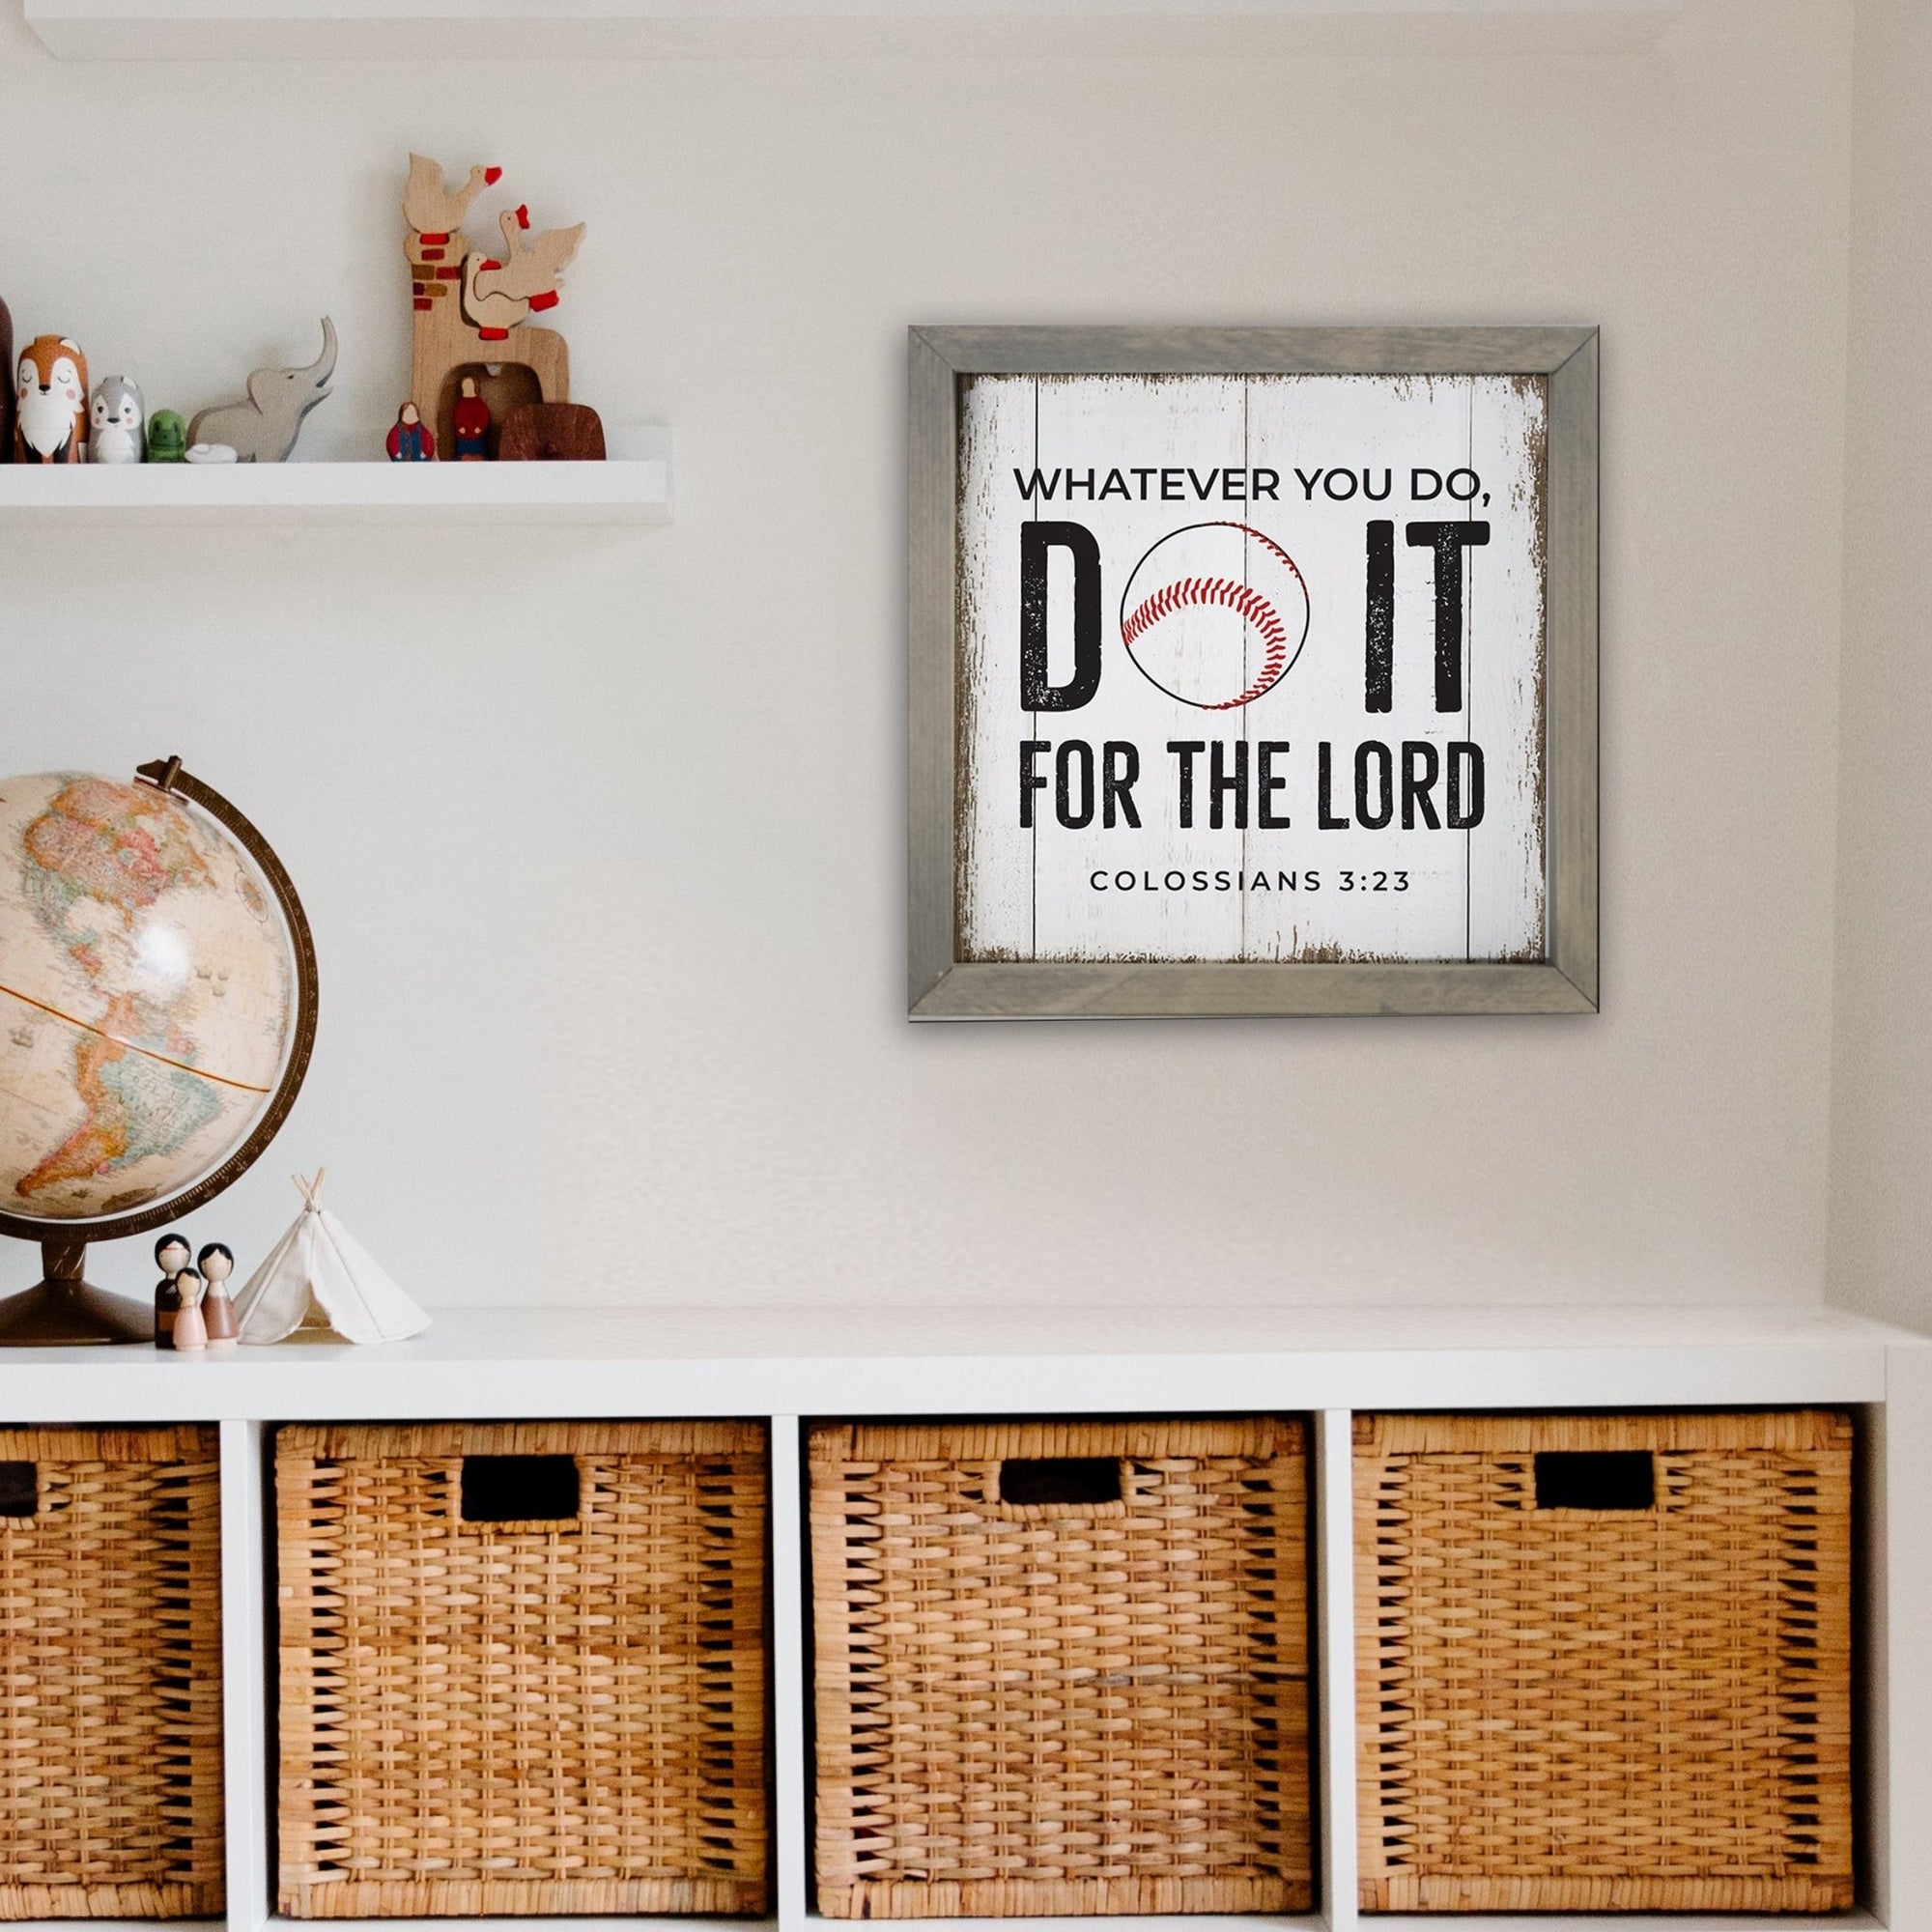 Elegant Baseball Framed Shadow Box Shelf Décor With Inspiring Bible Verses - Do It - LifeSong Milestones